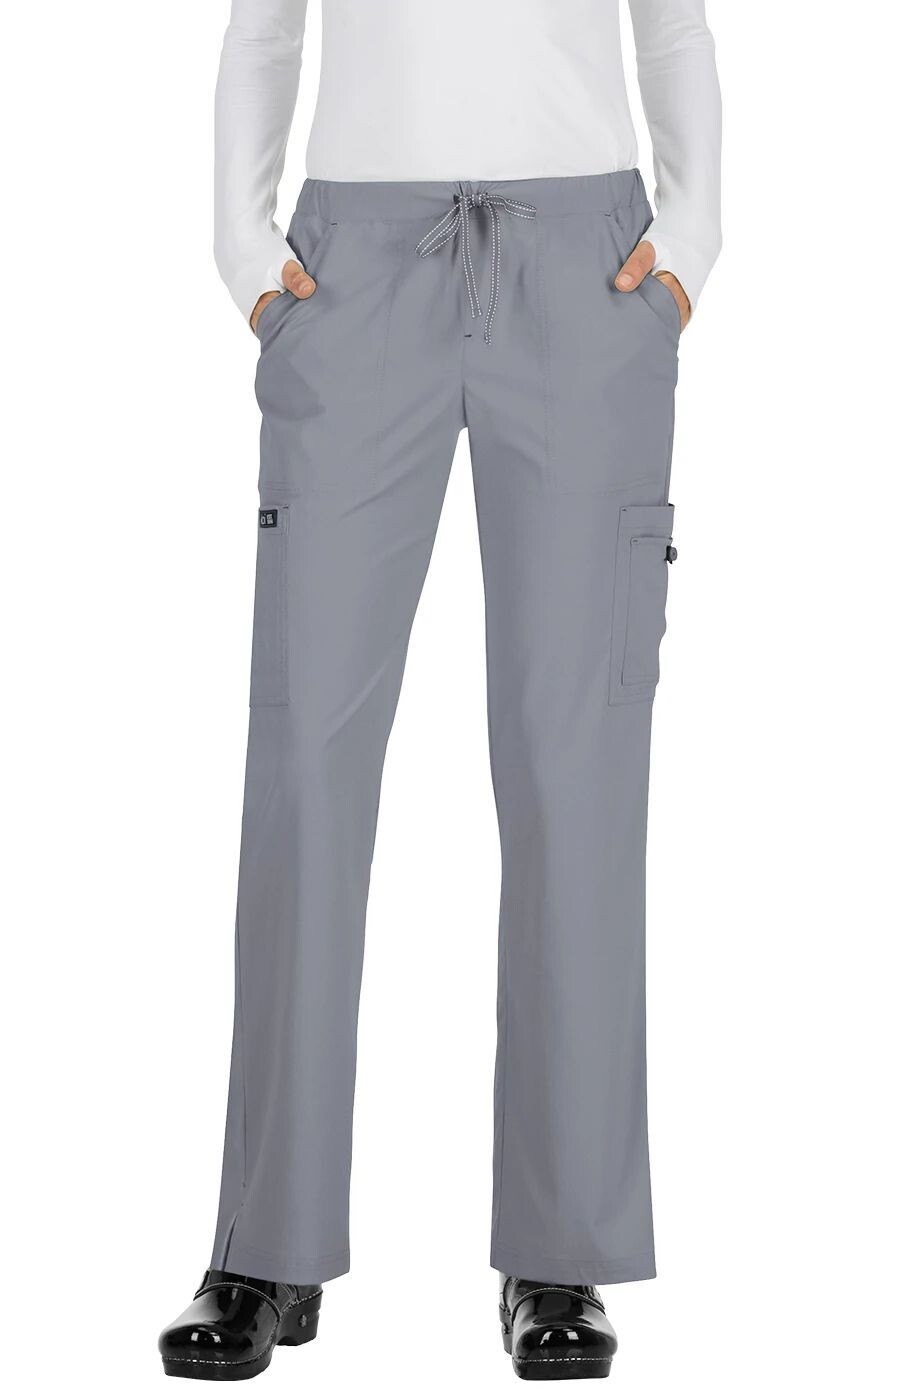 Pantalone KOI BASICS HOLLY Donna Colore 119. Platinum Grey